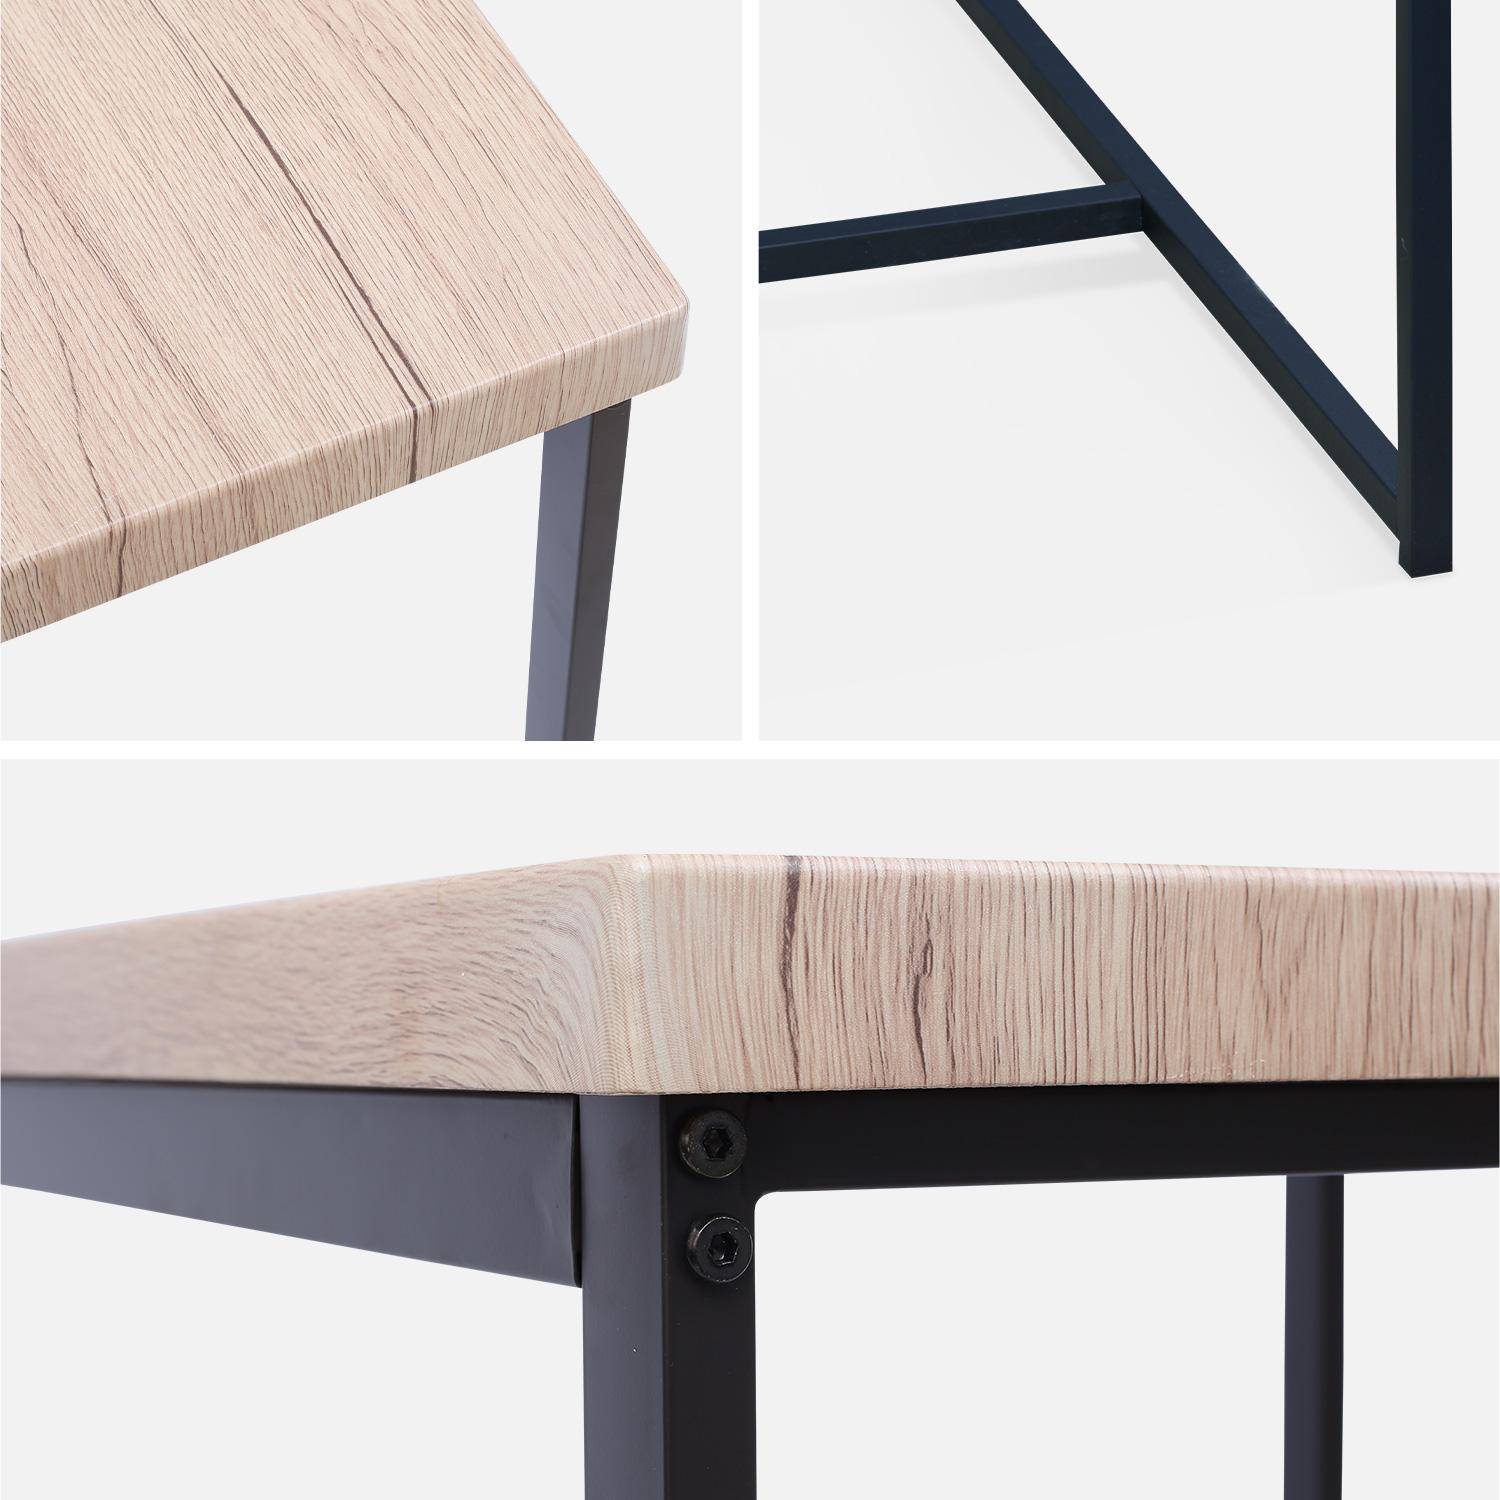 Industrial bar style table set with 4 stools, dining set 100x60x90cm - Loft - Black,sweeek,Photo6